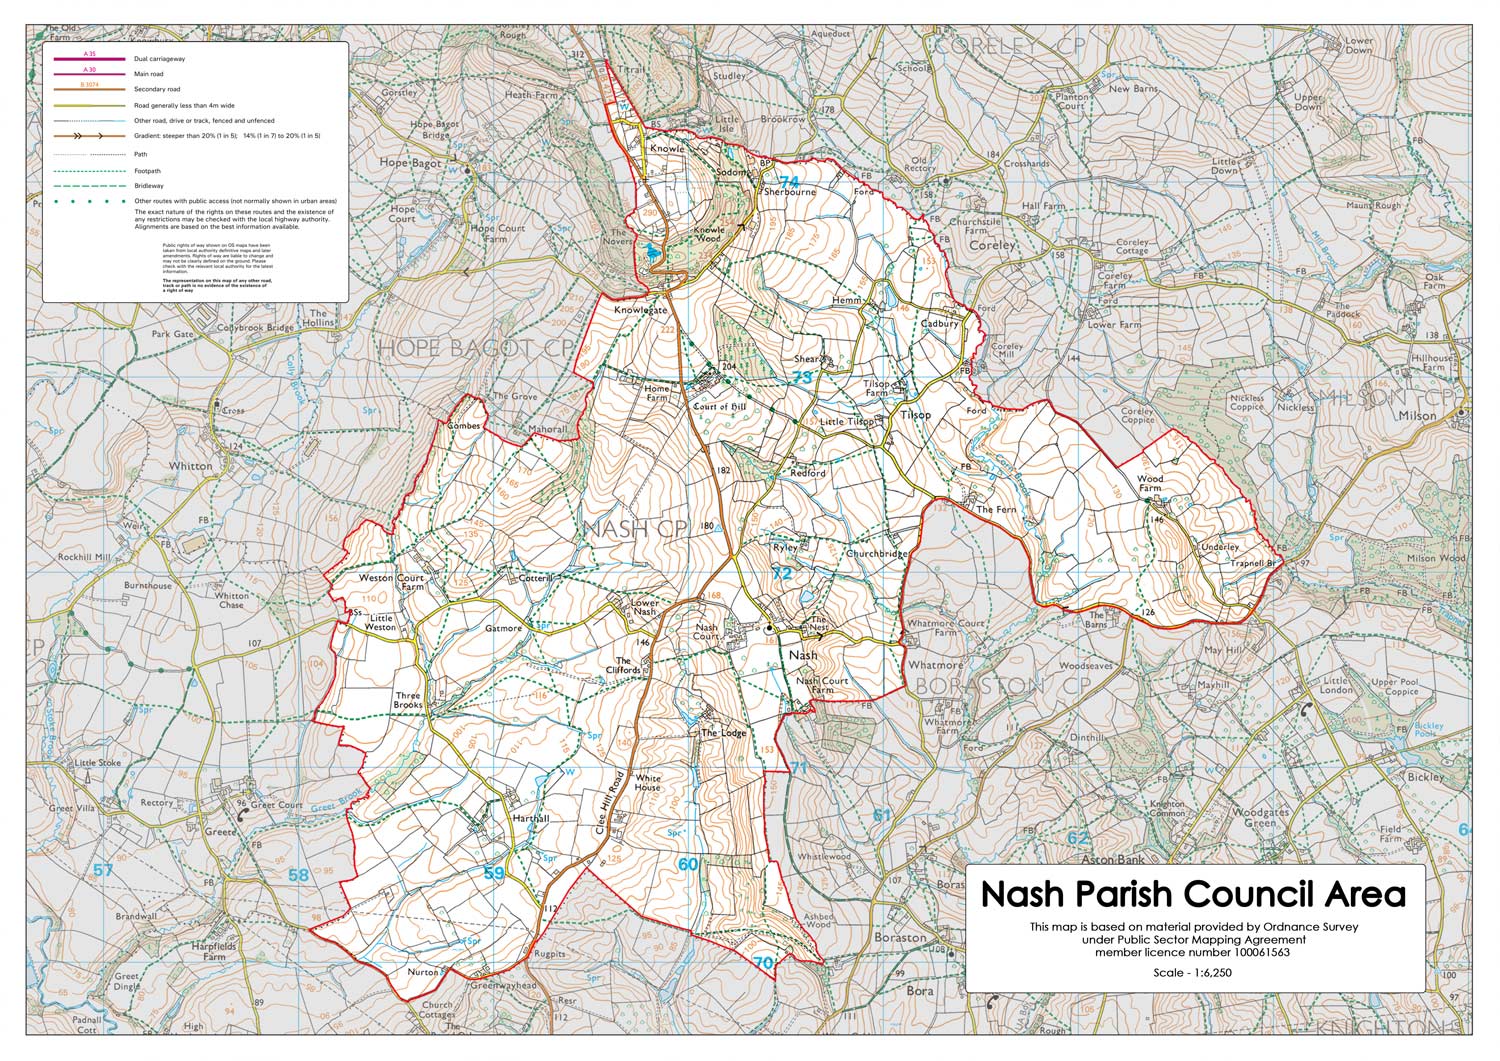 Nash Parish OS Map - CLICK IMAGE TO VIEW/DOWNLOAD